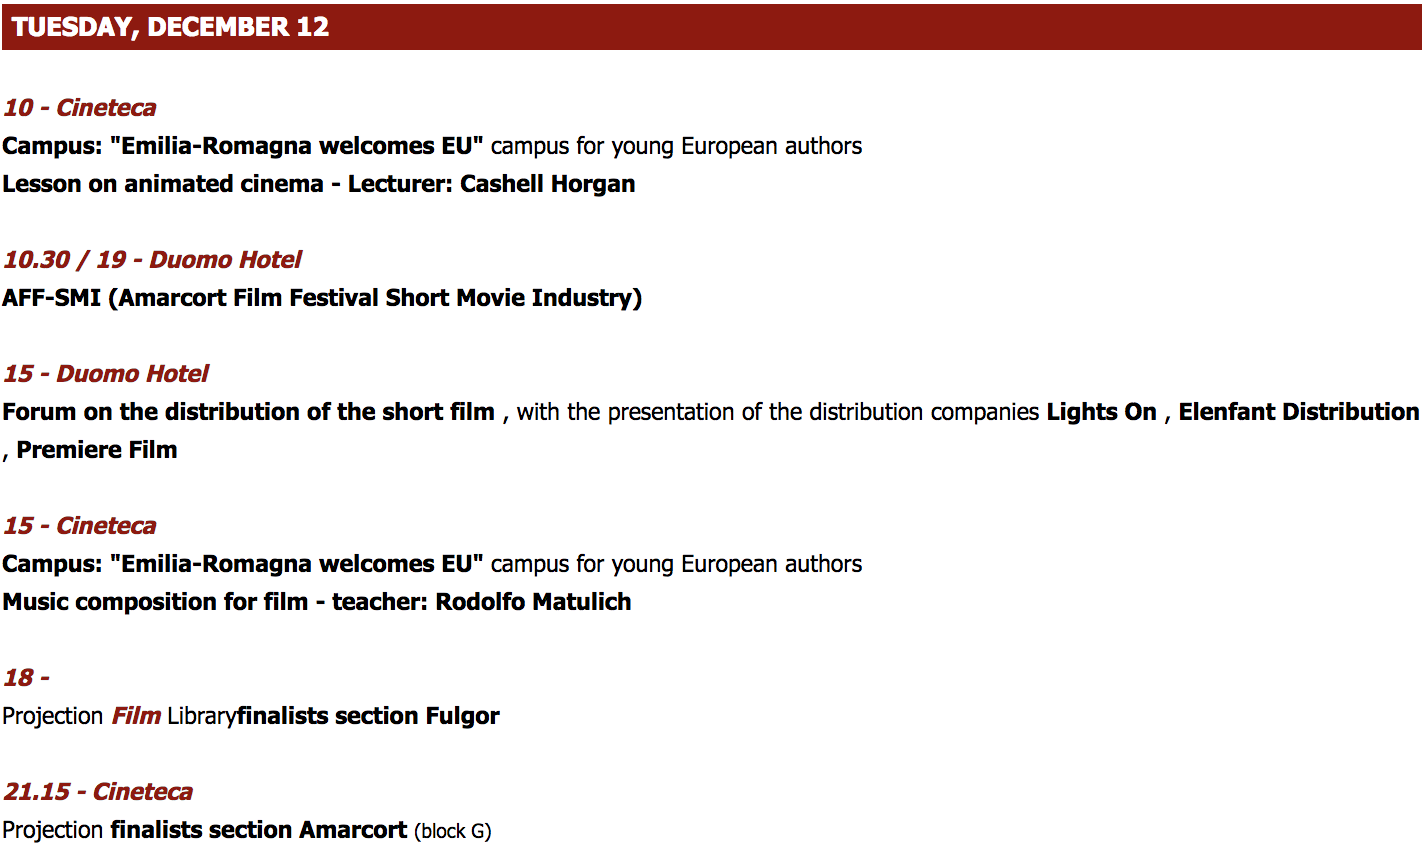 AFF-SMI (Amarcort Film Festival Short Movie Industry)-Schedule9.png